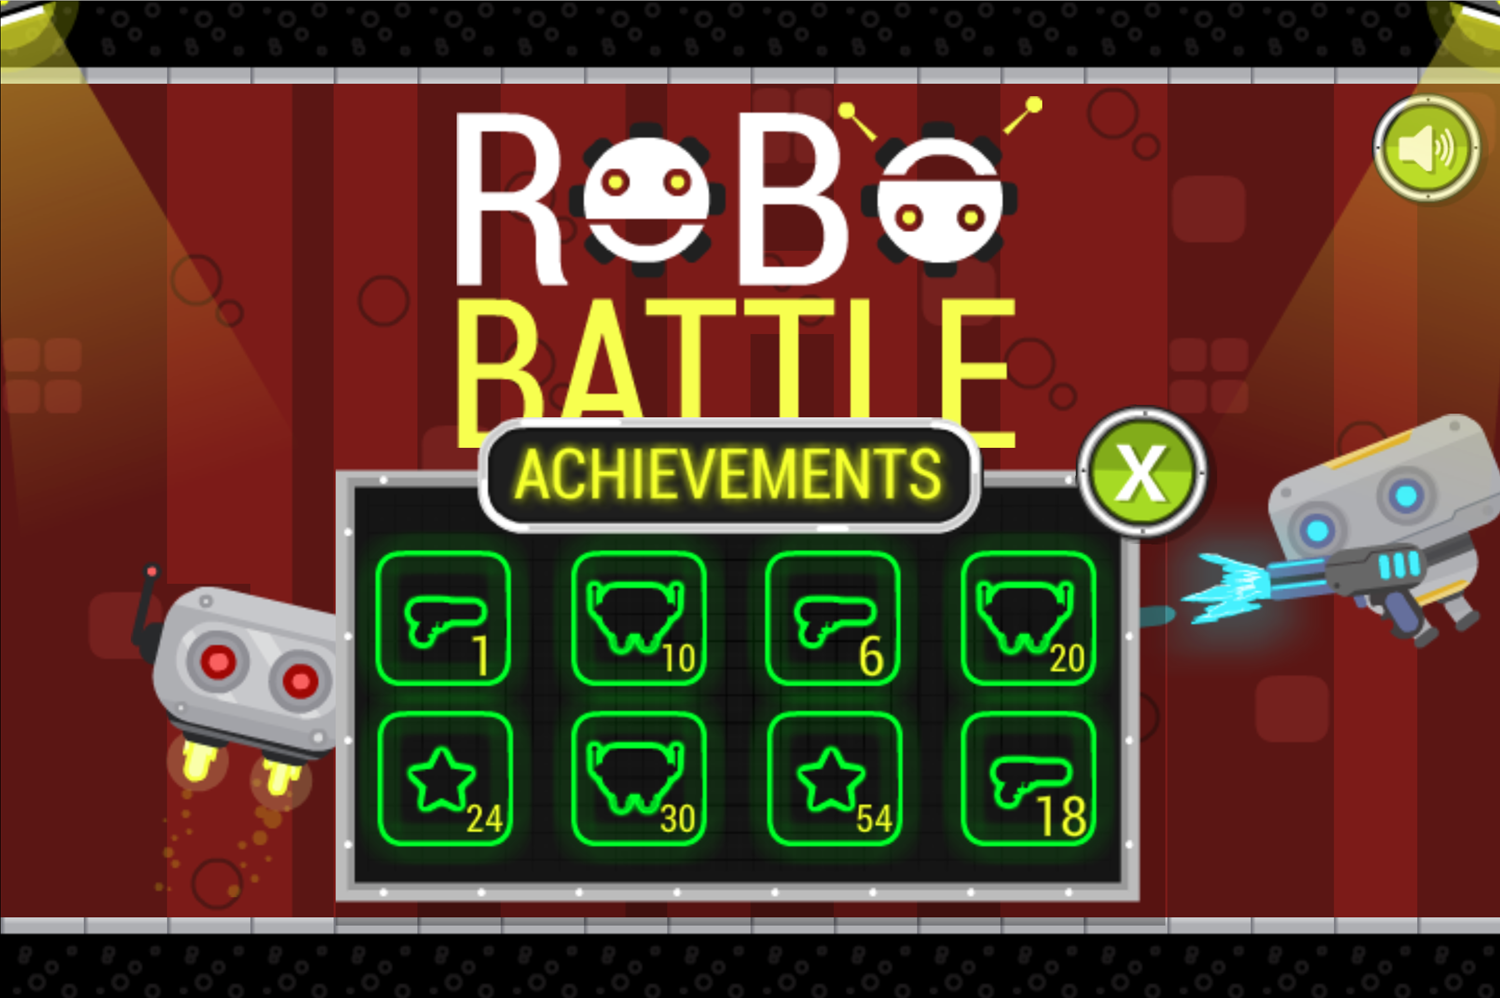 Robo Battle Game Achievements Screen Screenshot.